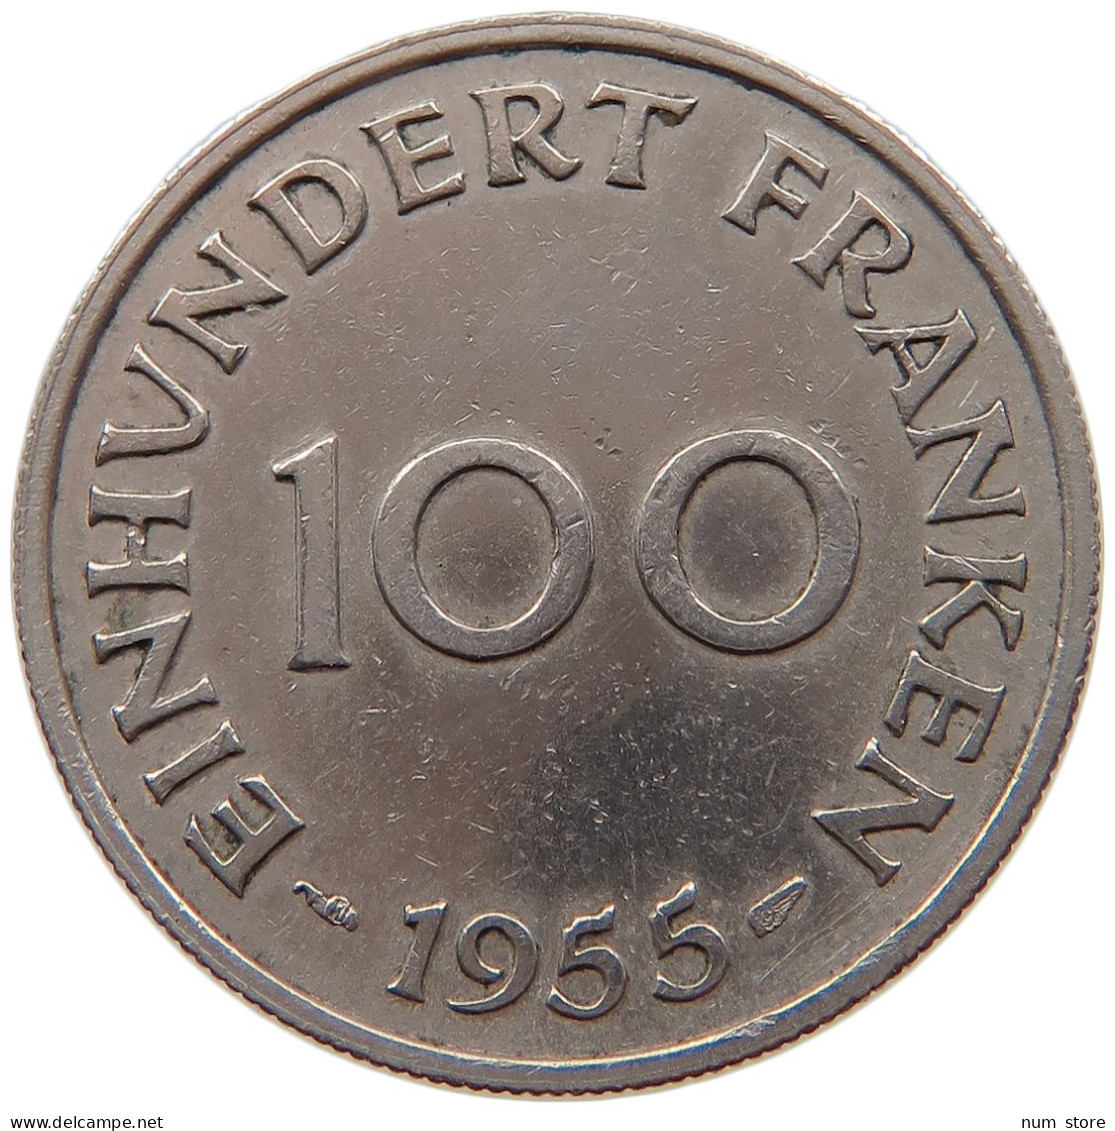 SAARLAND 100 FRANKEN 1955  #c063 0401 - 100 Francos